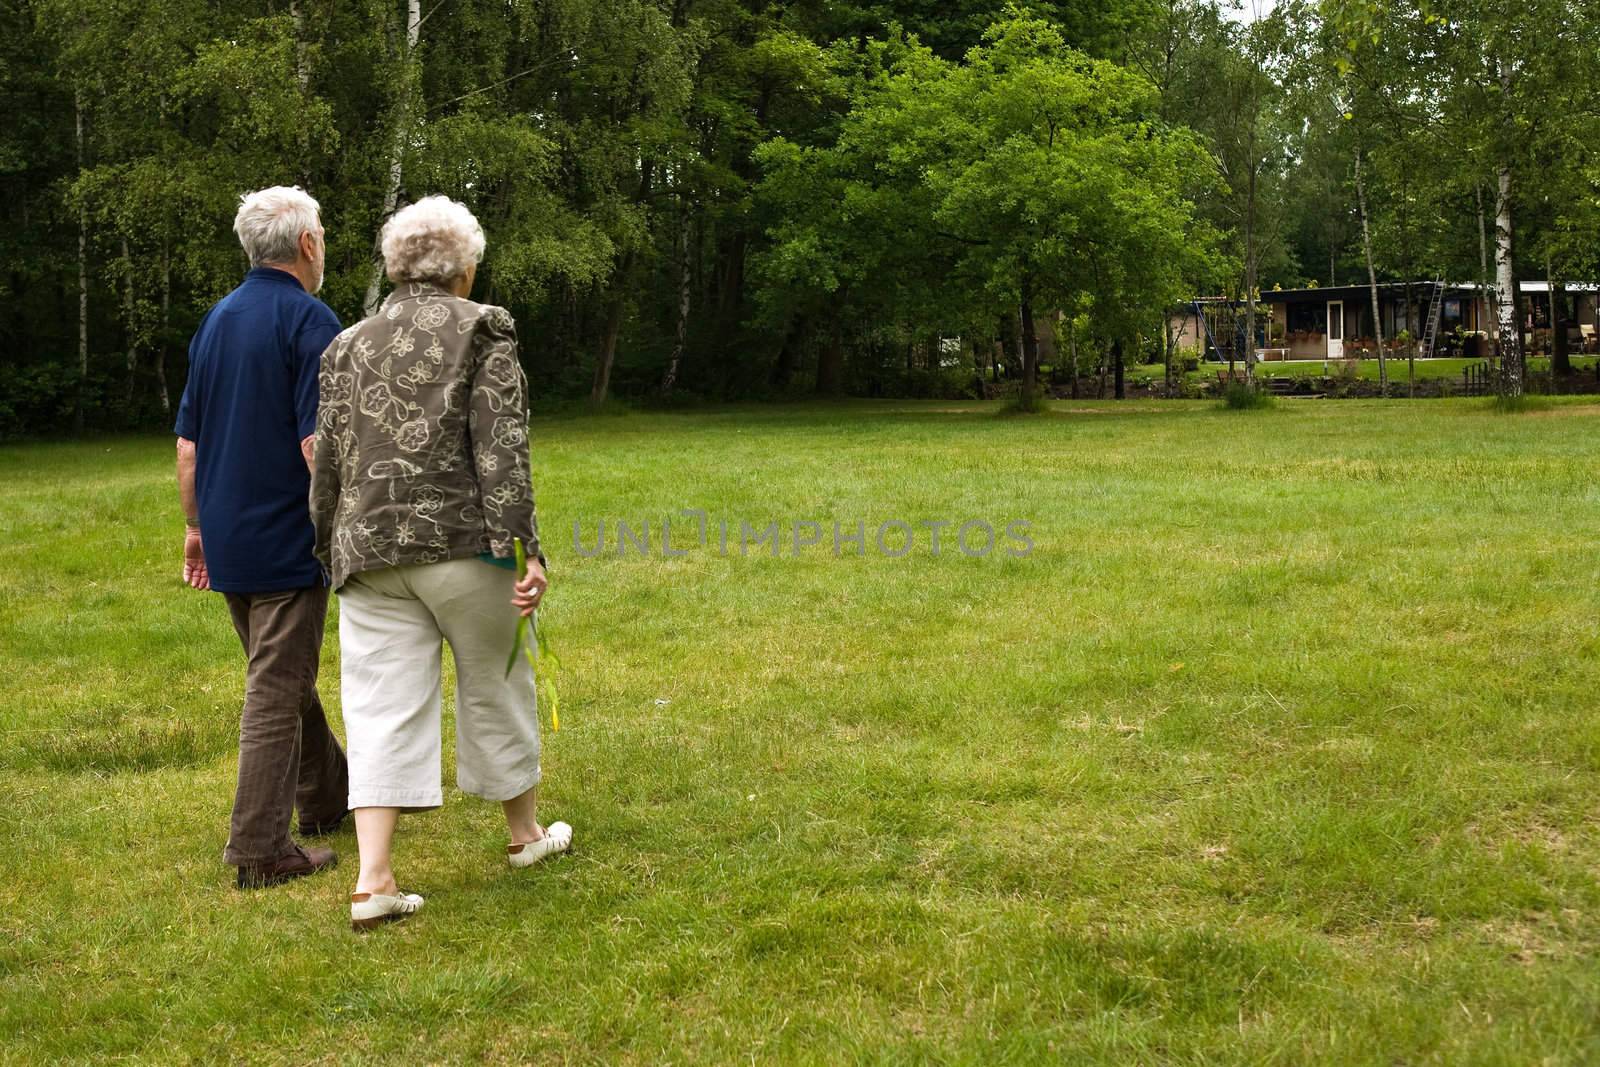 outside portrait of an elderly couple in a park